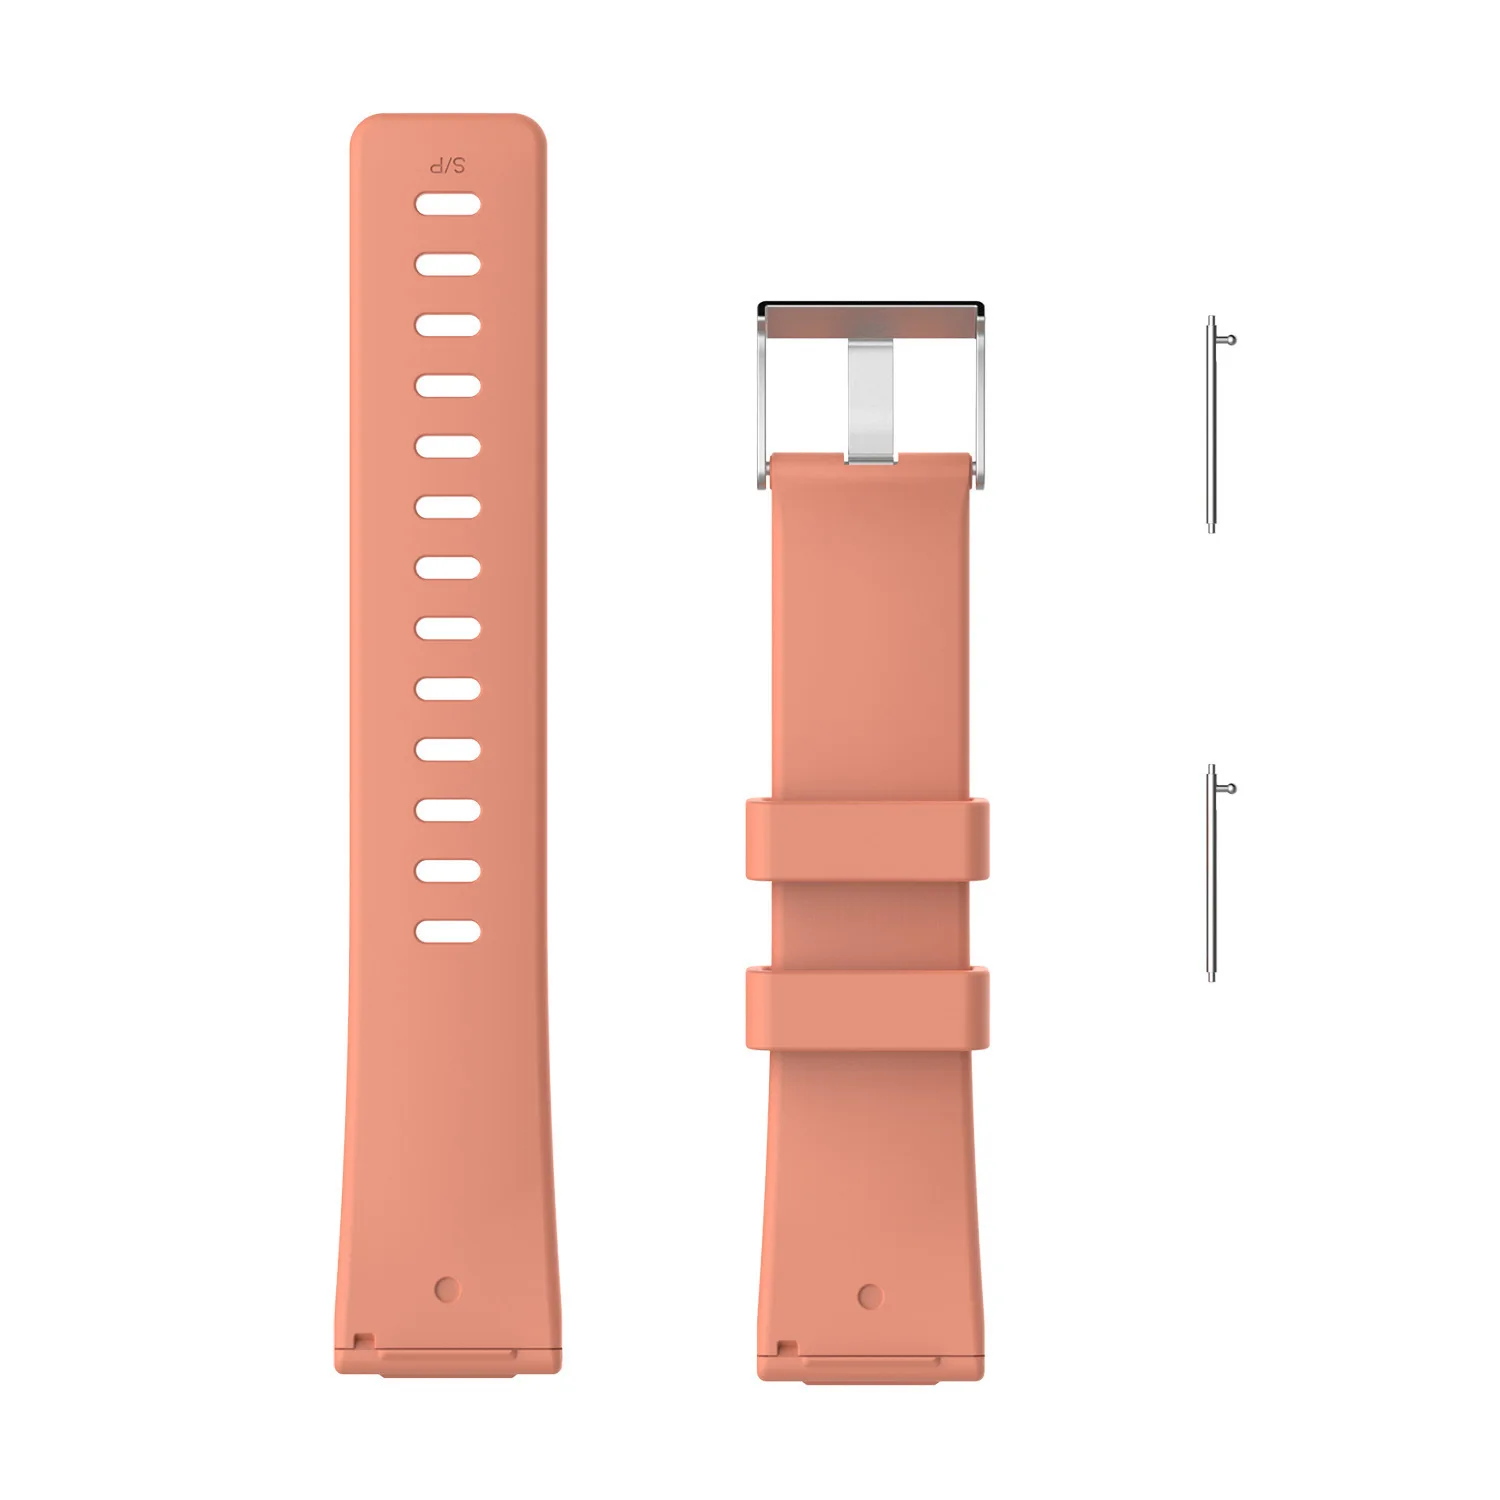 Duszake ремешок для Fitbit Versa/Versa Lite ремешок для Fitbit Versa силиконовый браслет сменный Браслет для Fit Bit Versa ремешок